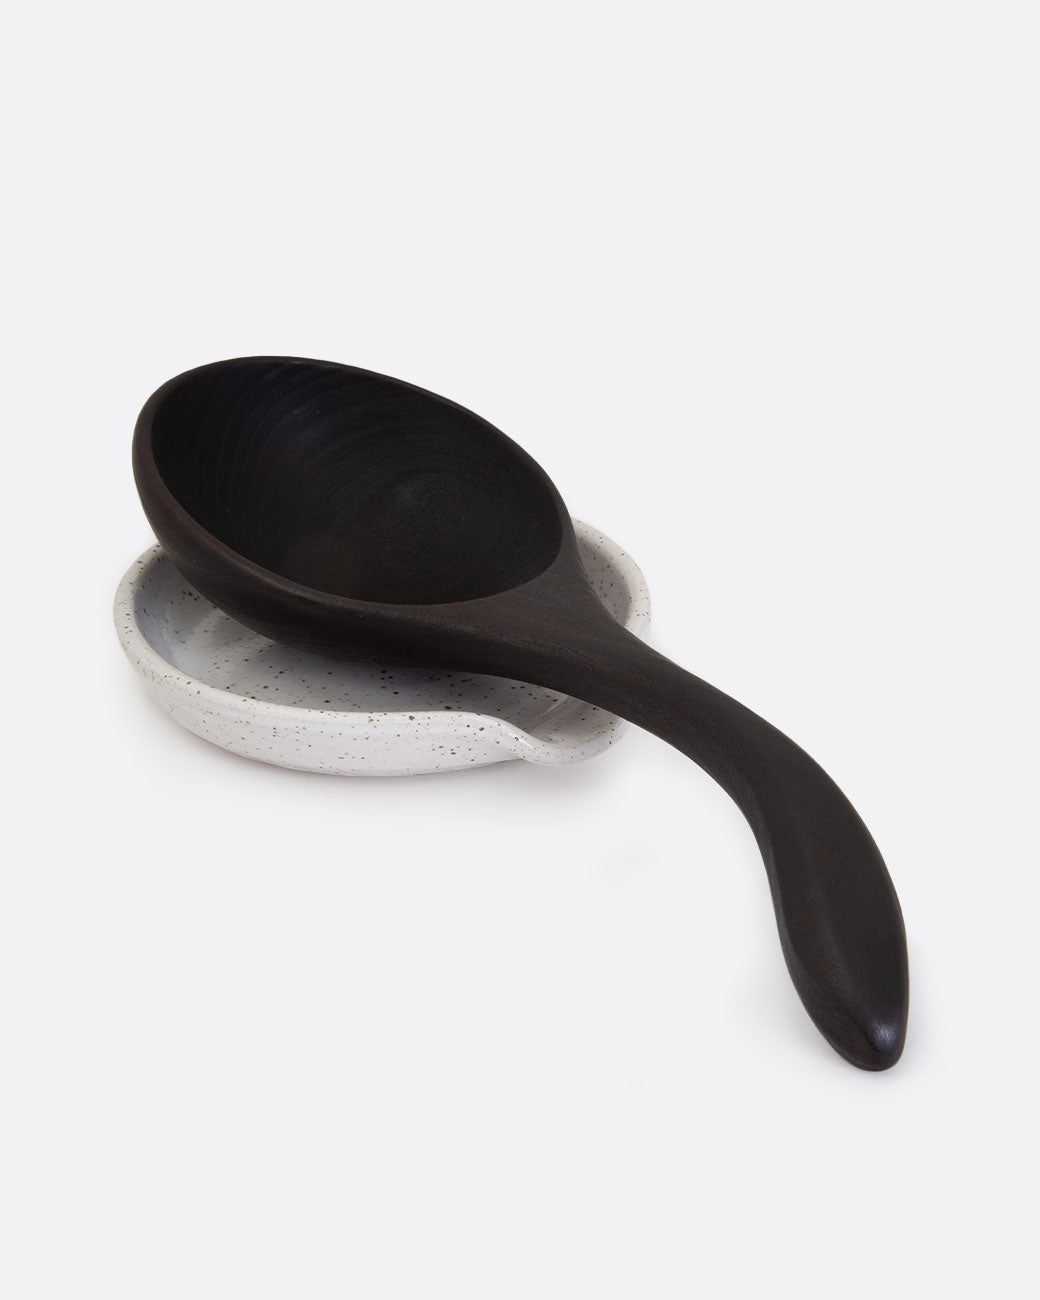 White stoneware spoon rest shown with black spoon.